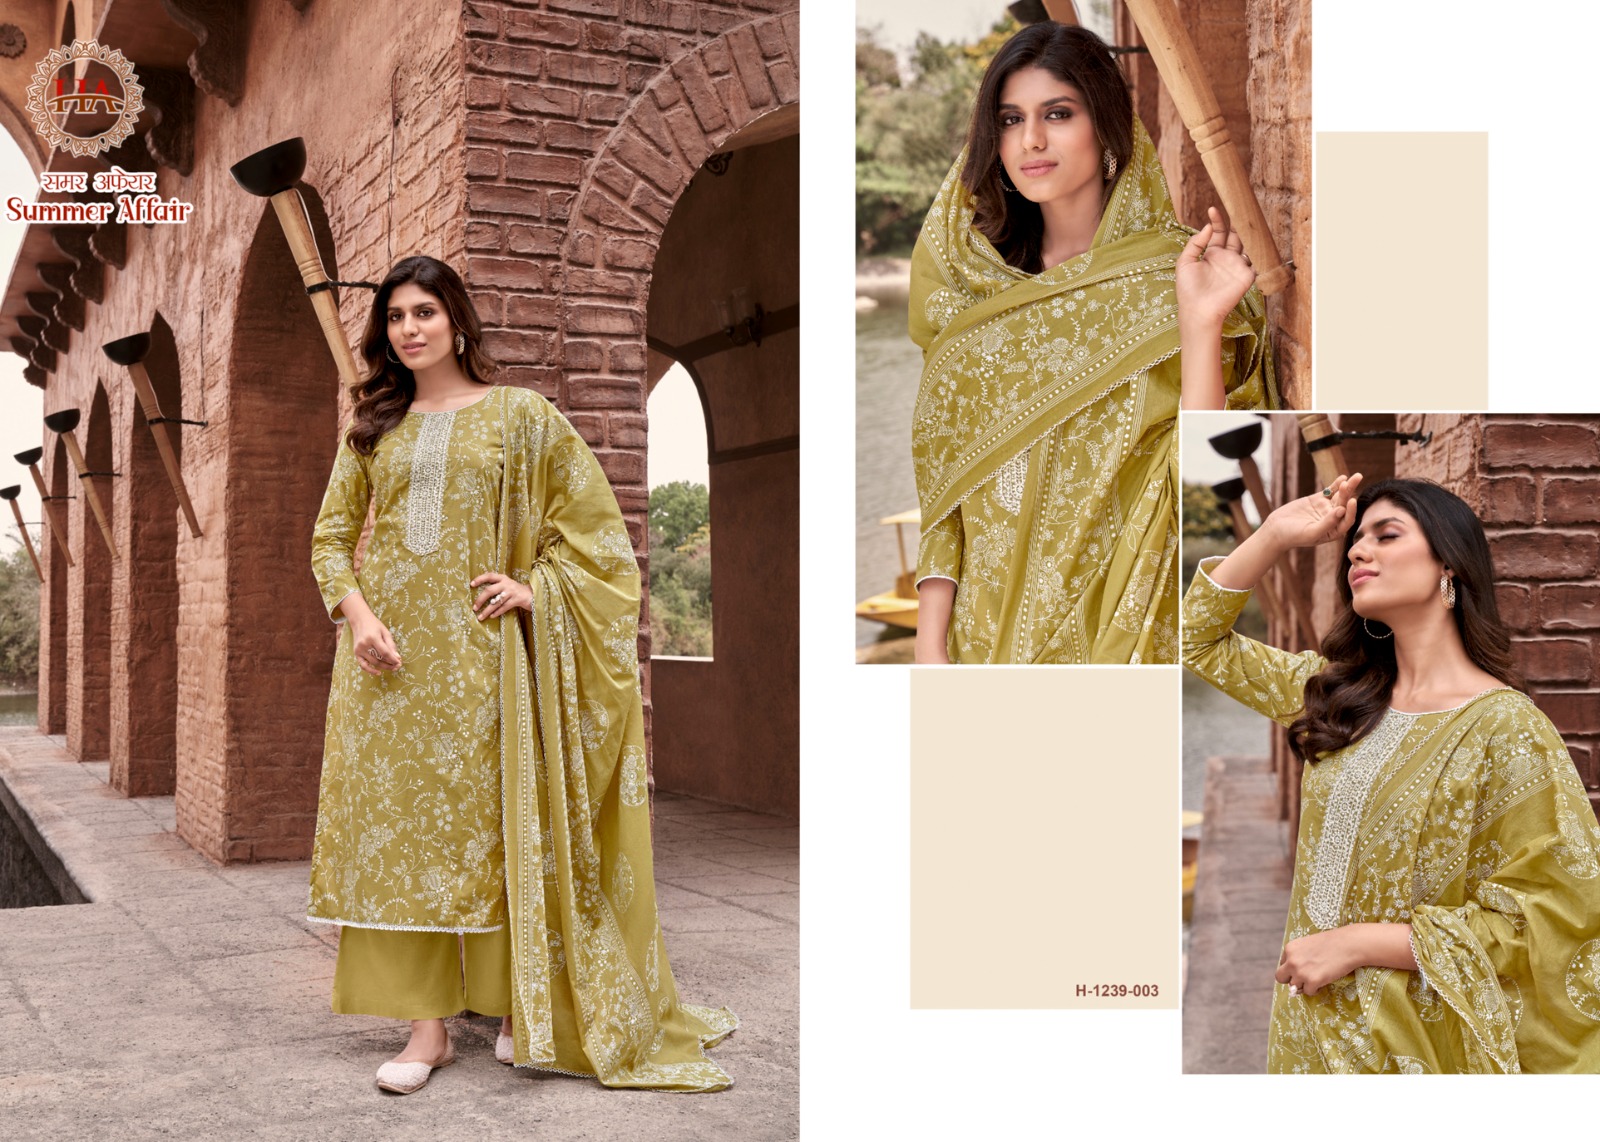 harshit fashion summer affair cambric cotton regal look salwar suit catalog